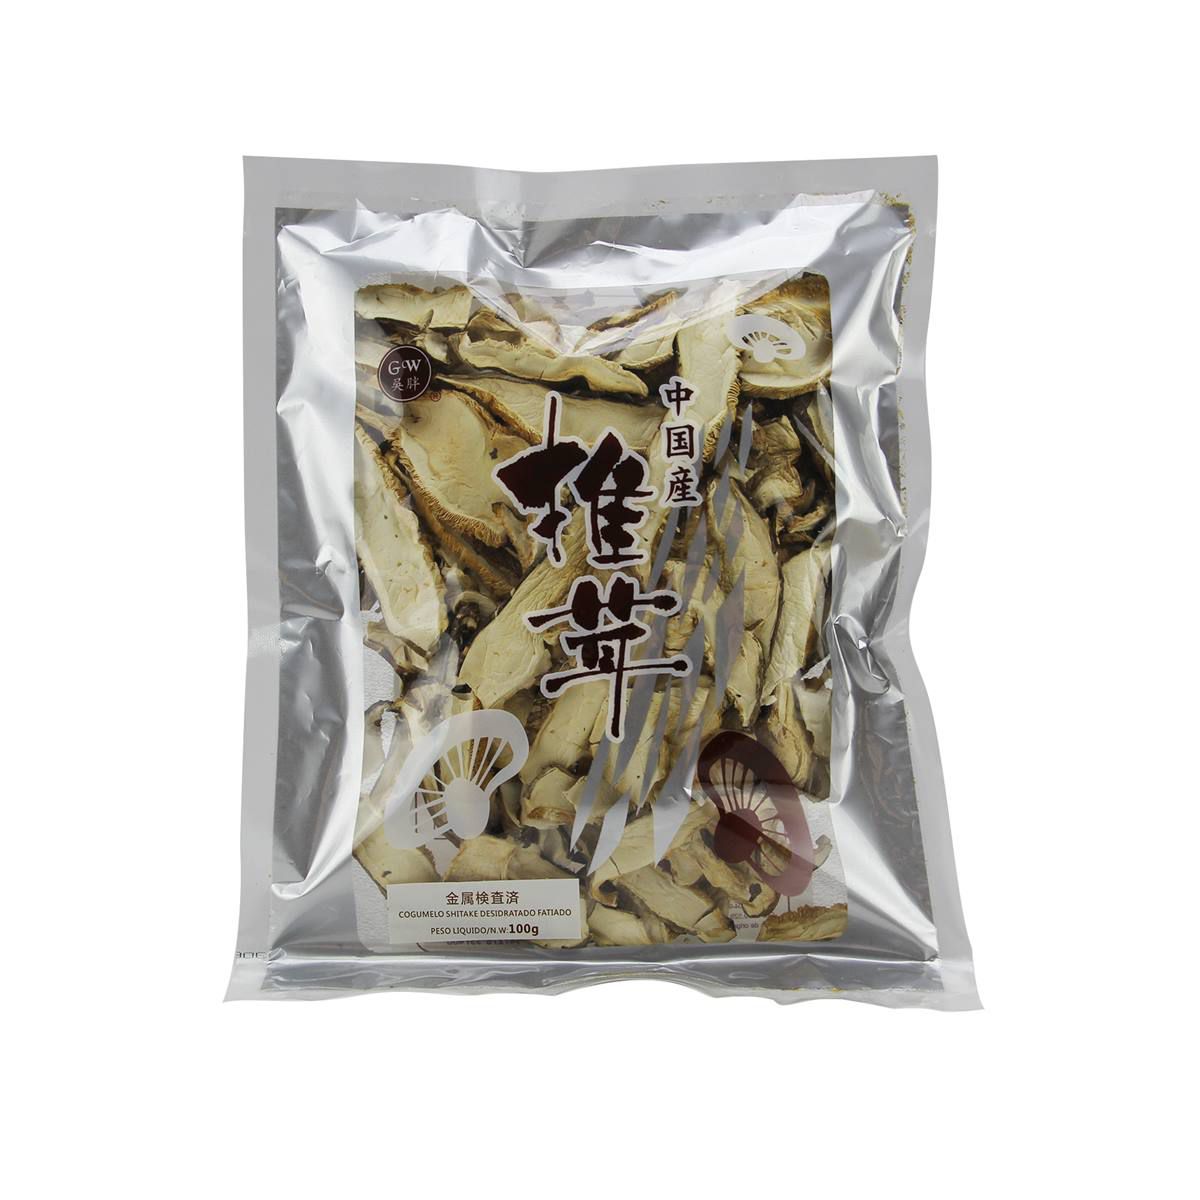 Cogumelo Shitake desidratado fatiado 100g